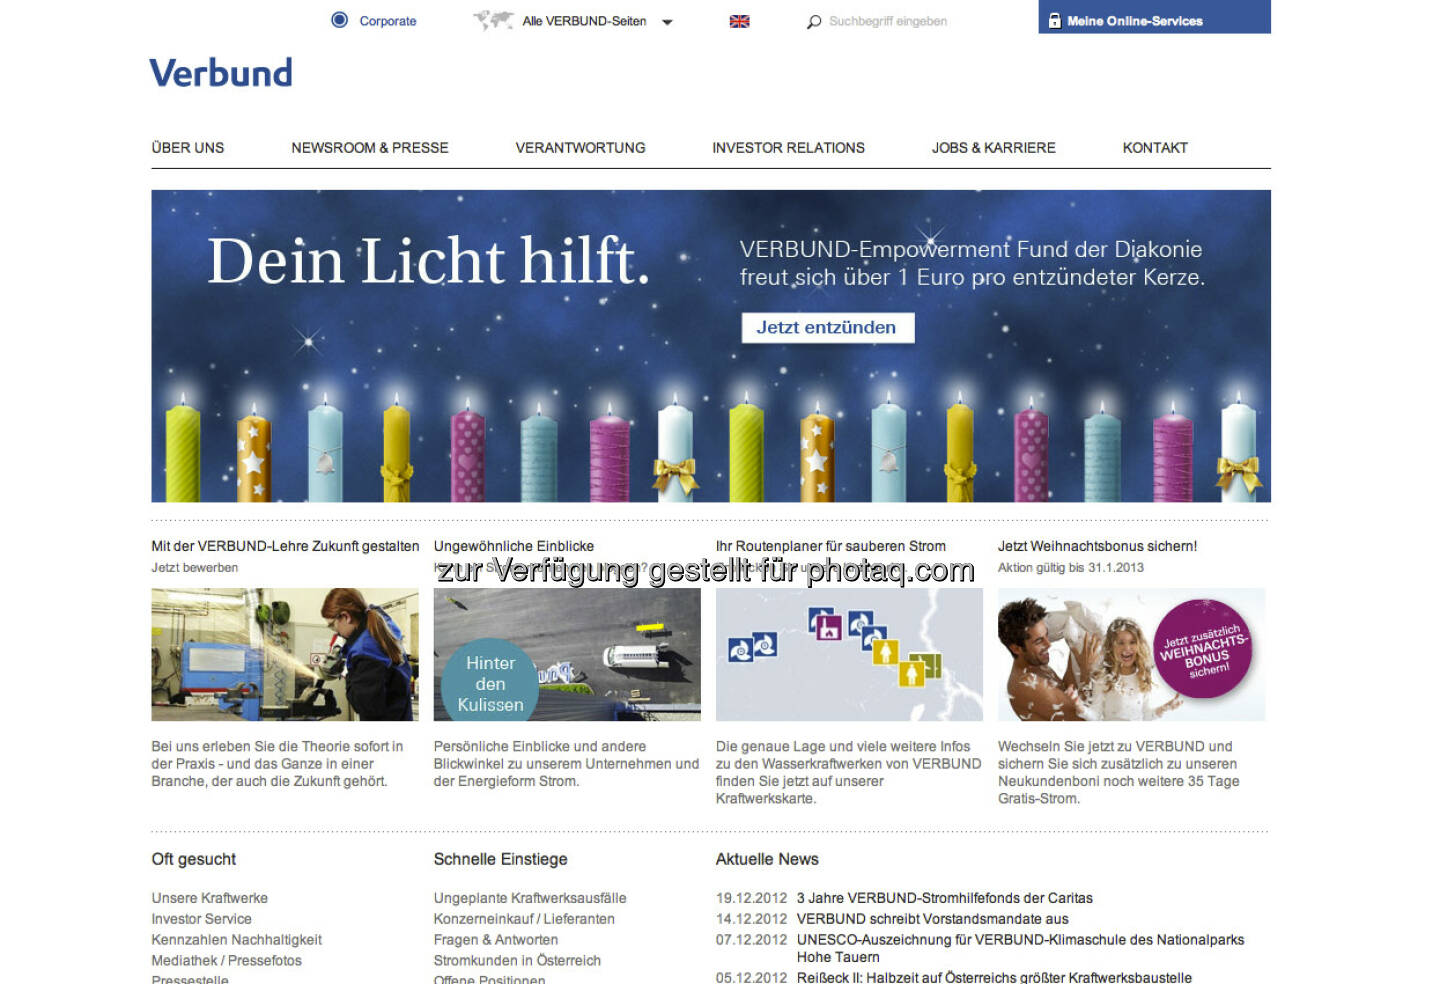 Verbund Homepage http://www.verbund.com/cc/de/